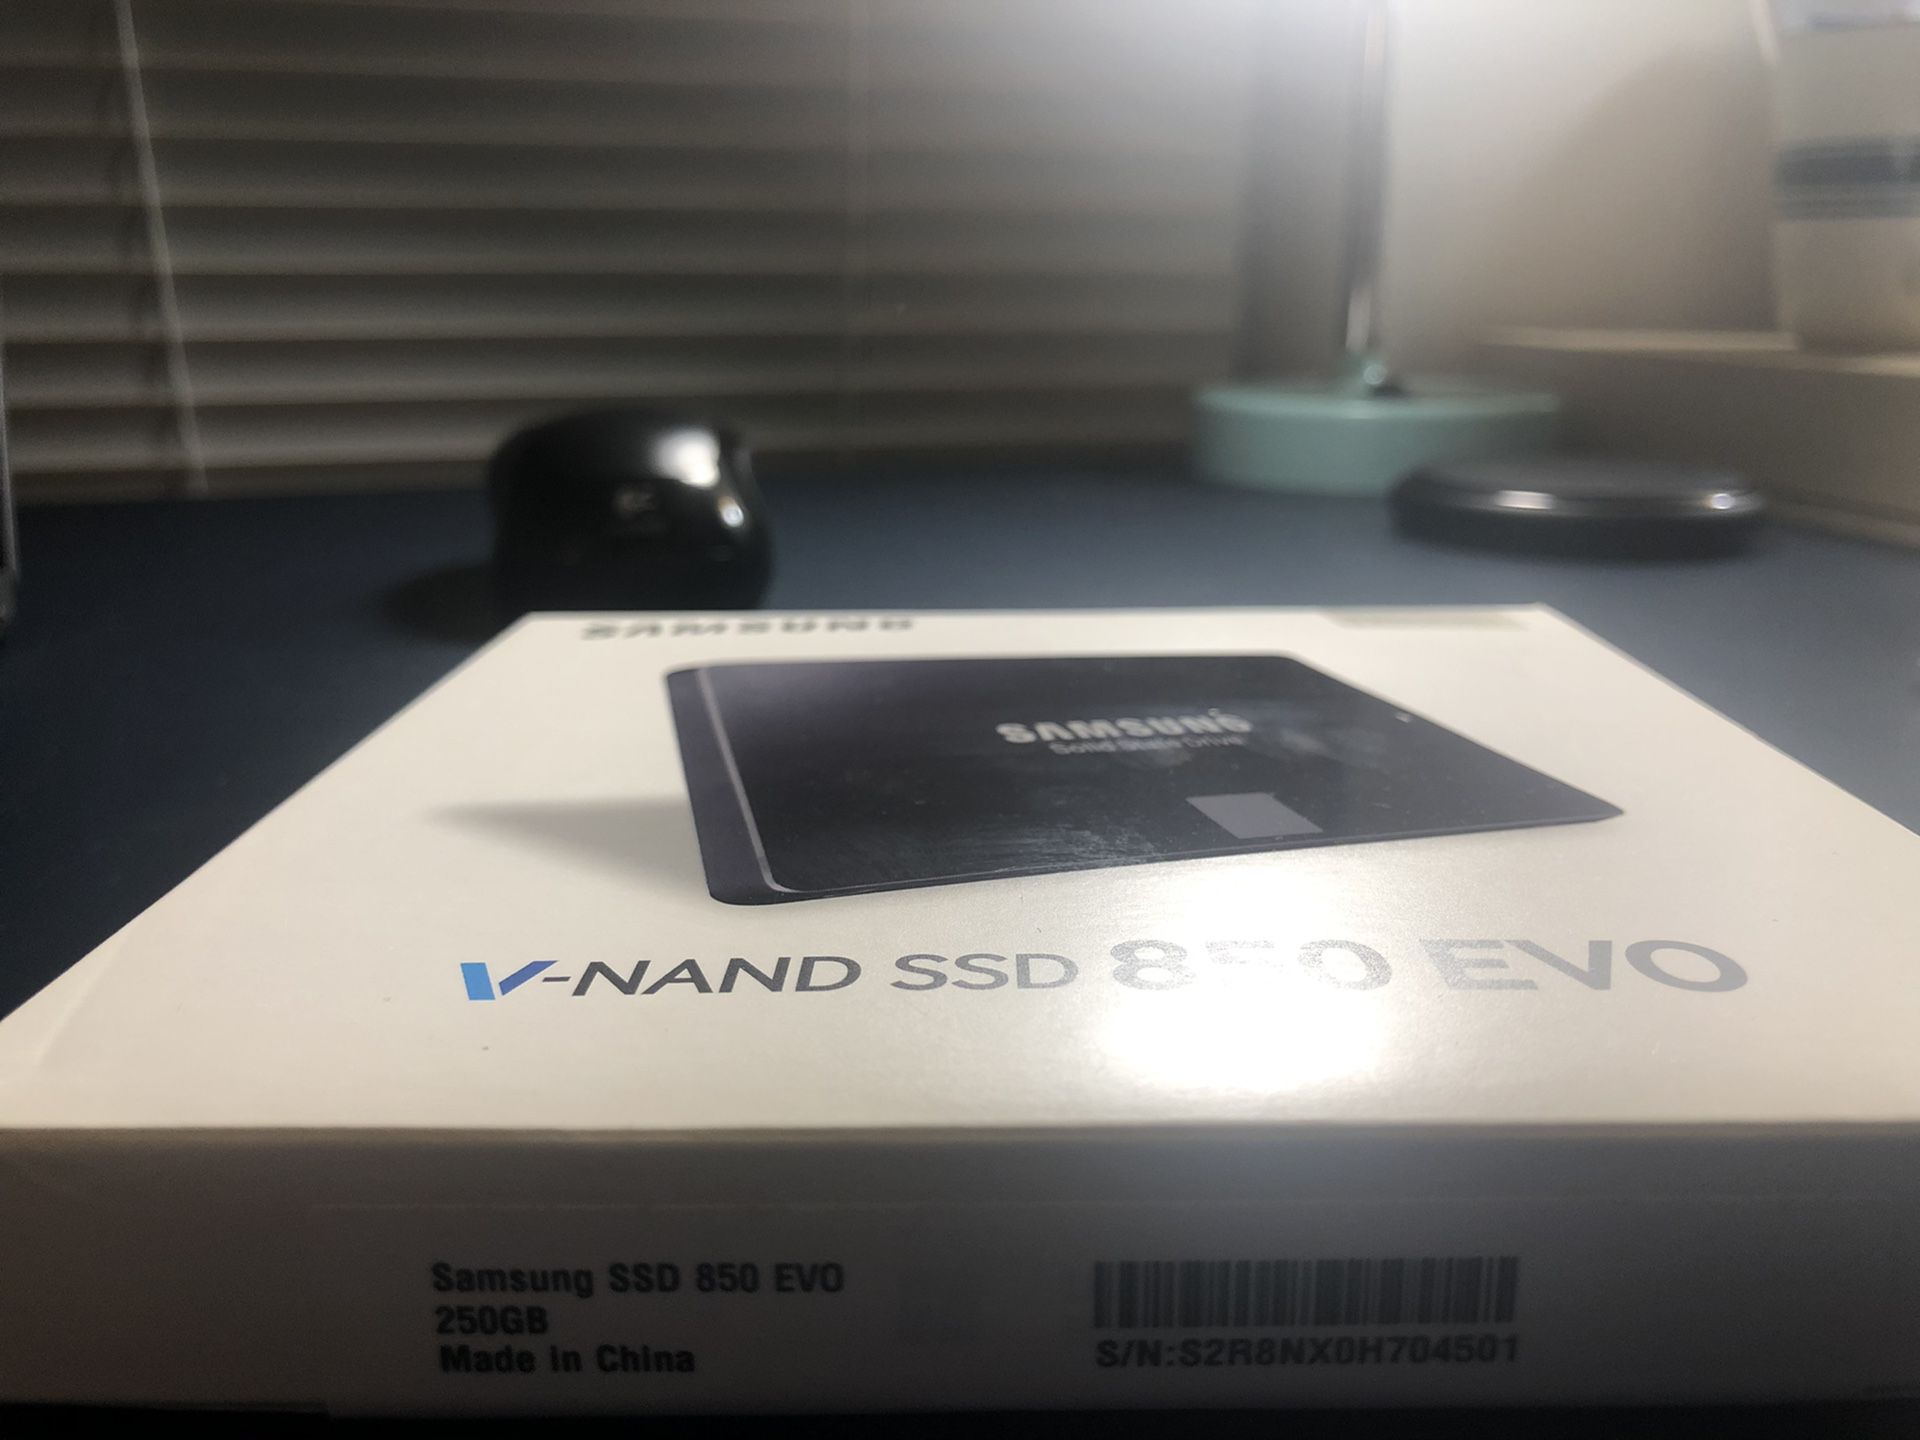 Samsung 850 EVO 250GB Internal 2.5" (MZ-75E250B/AM) SSD Brand New (Open Box)